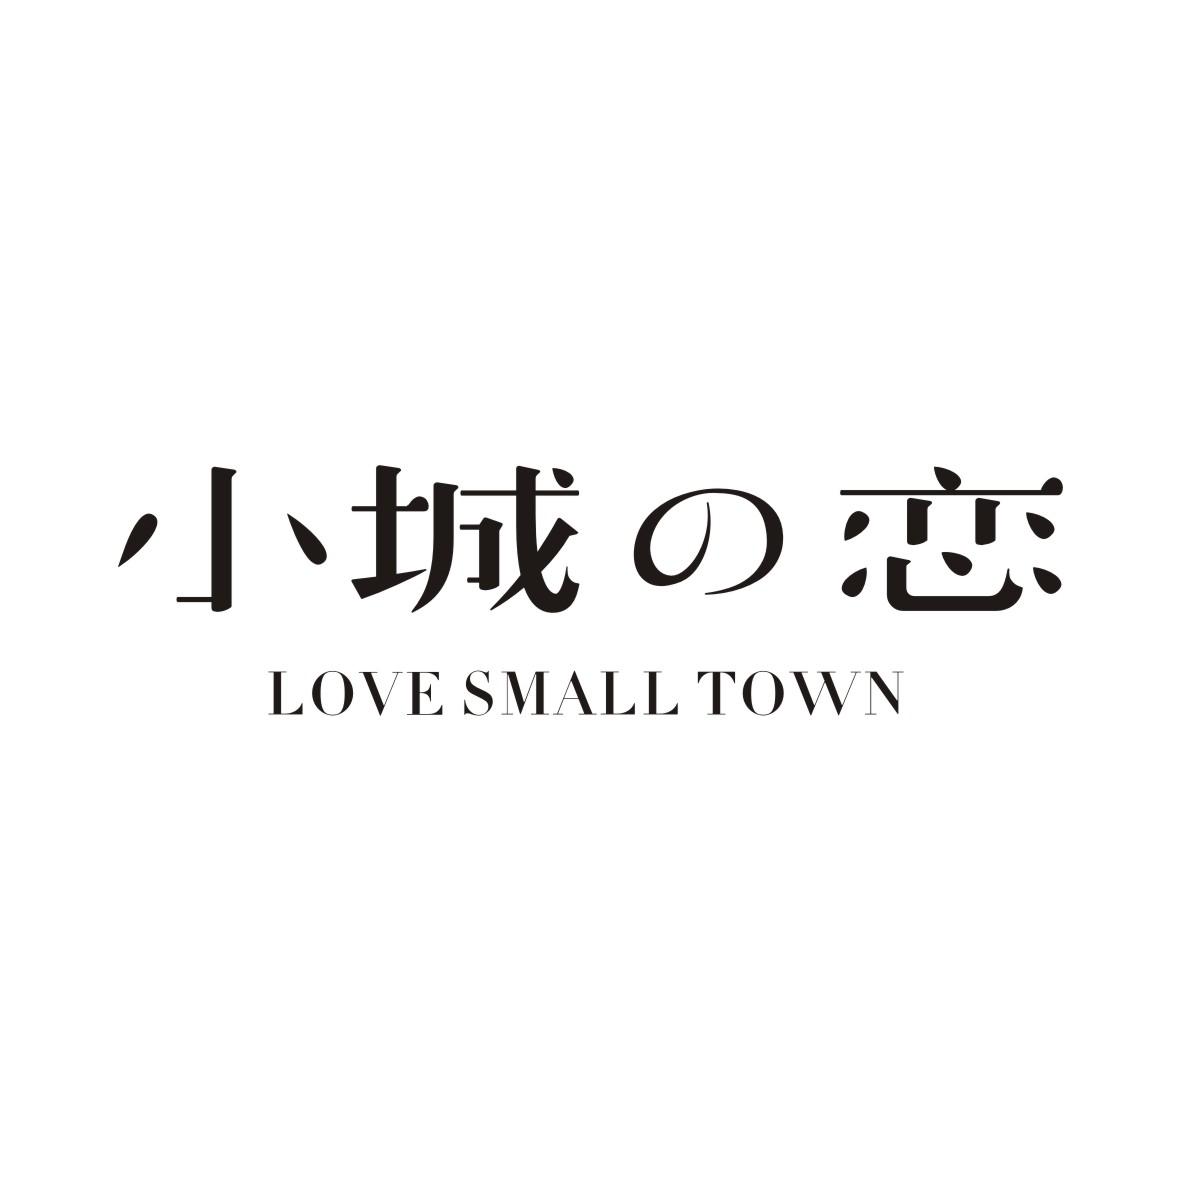 小城恋 LOVE SMALL TOWN商标转让